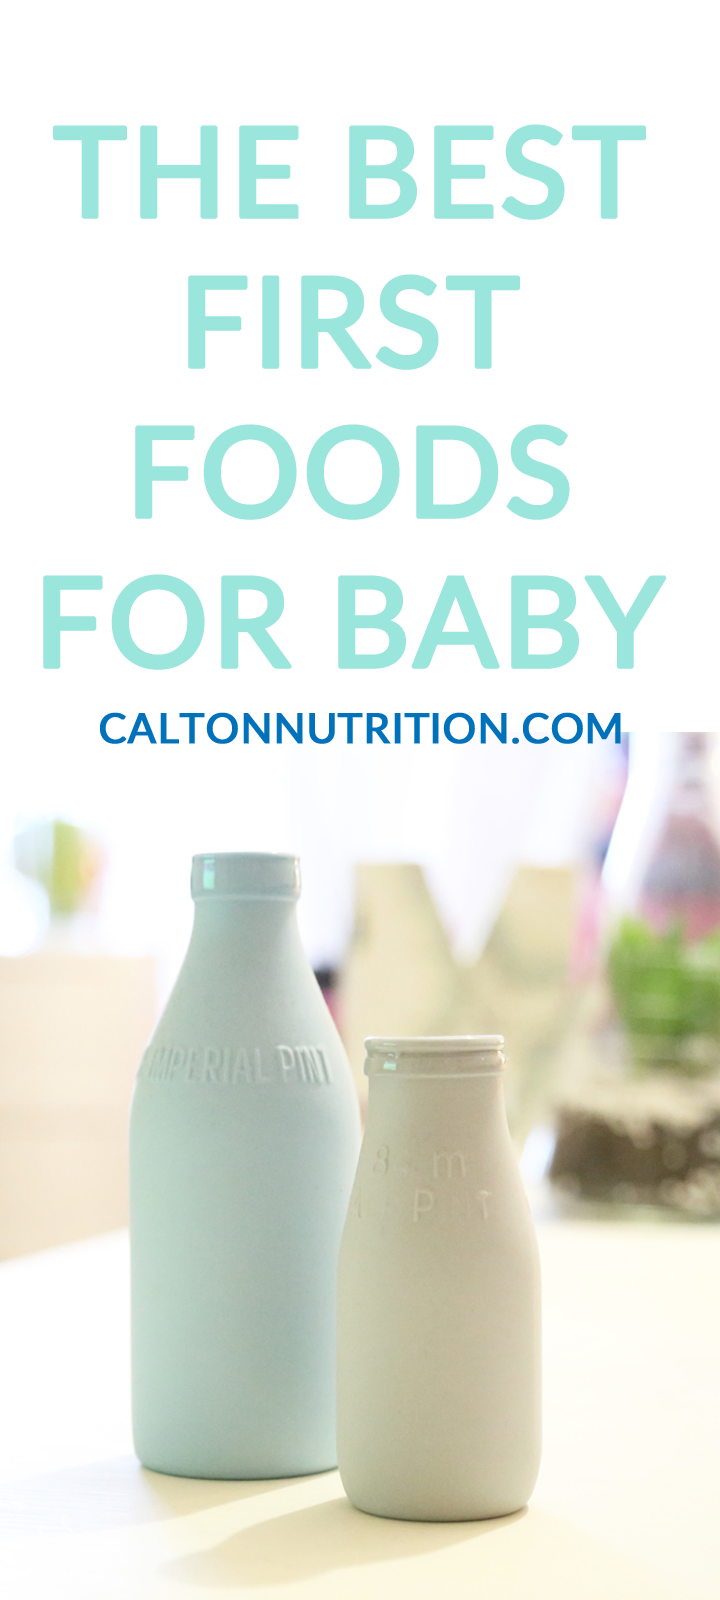 What is best after breast? | Best first foods for babies CaltonNutrition.com @caltonnutrition